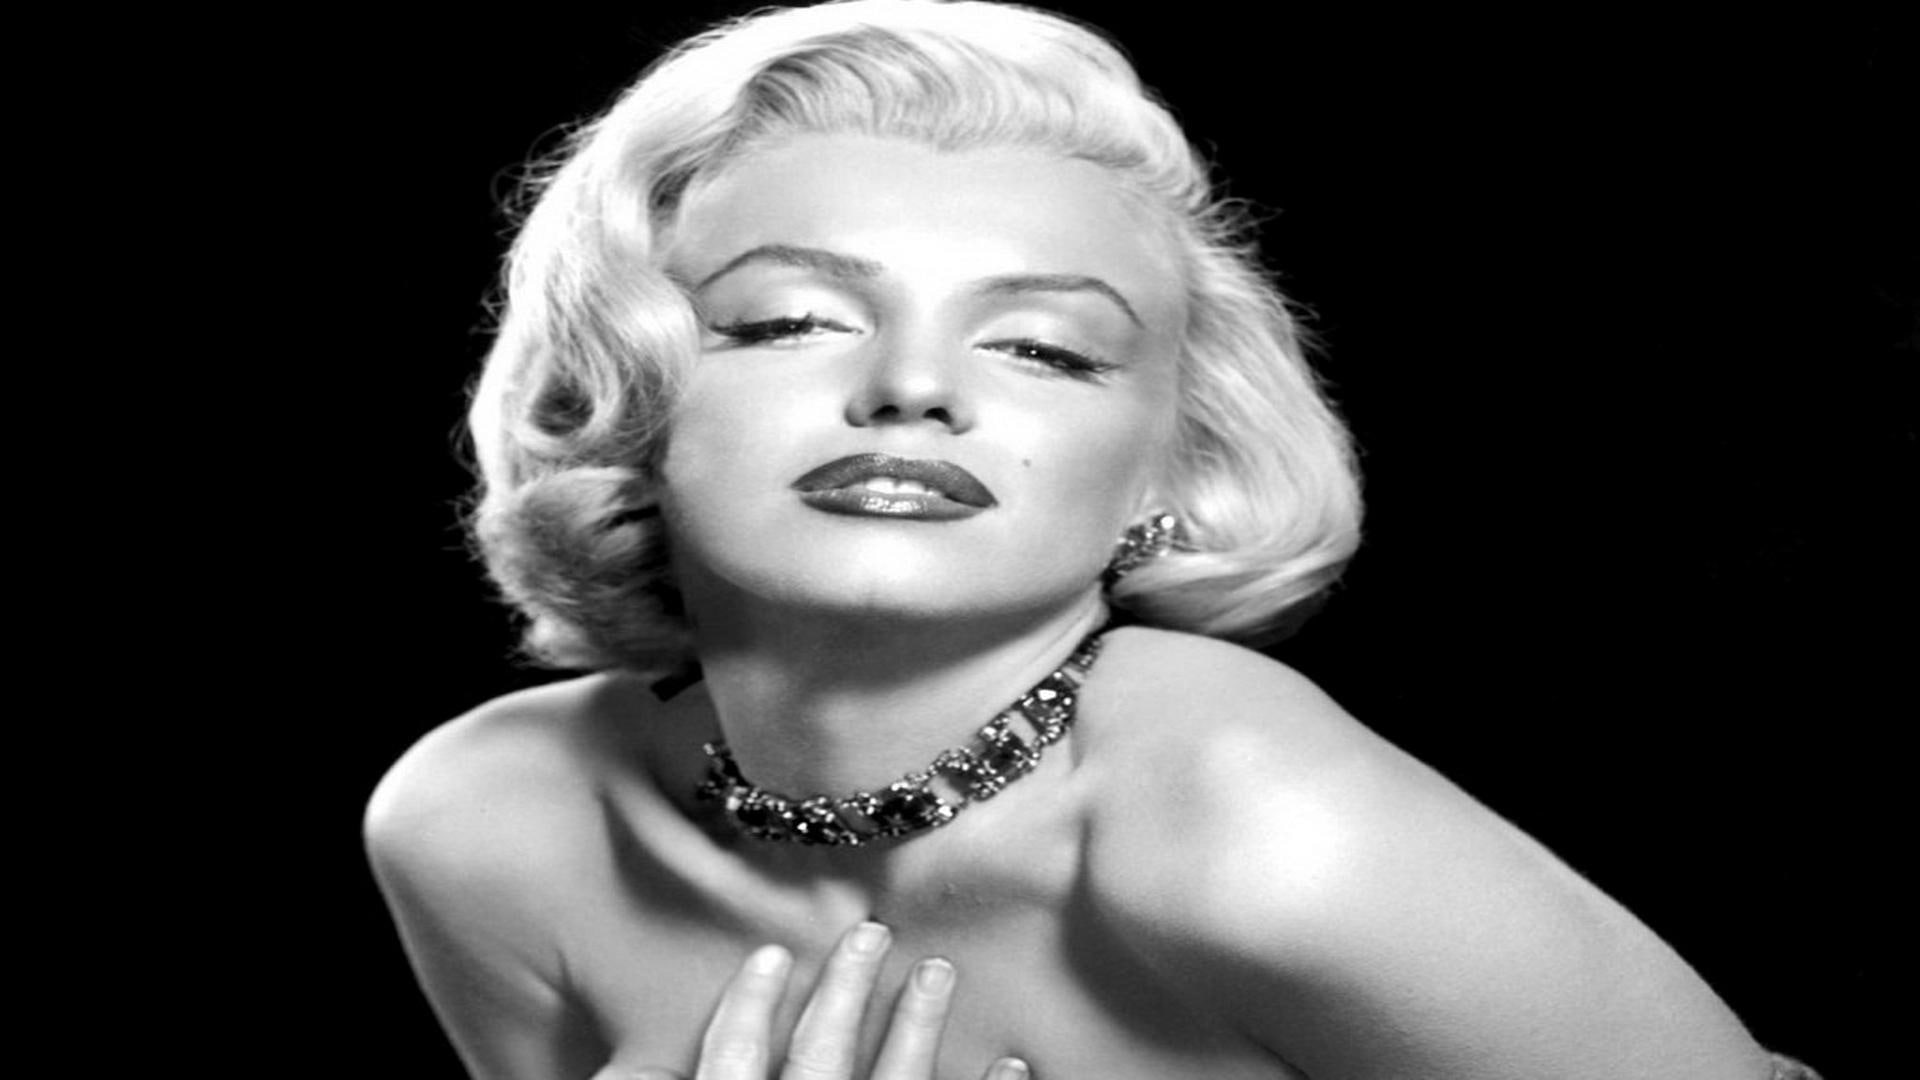 Marilyn Monroe Black and White Desktop Background, celebrity